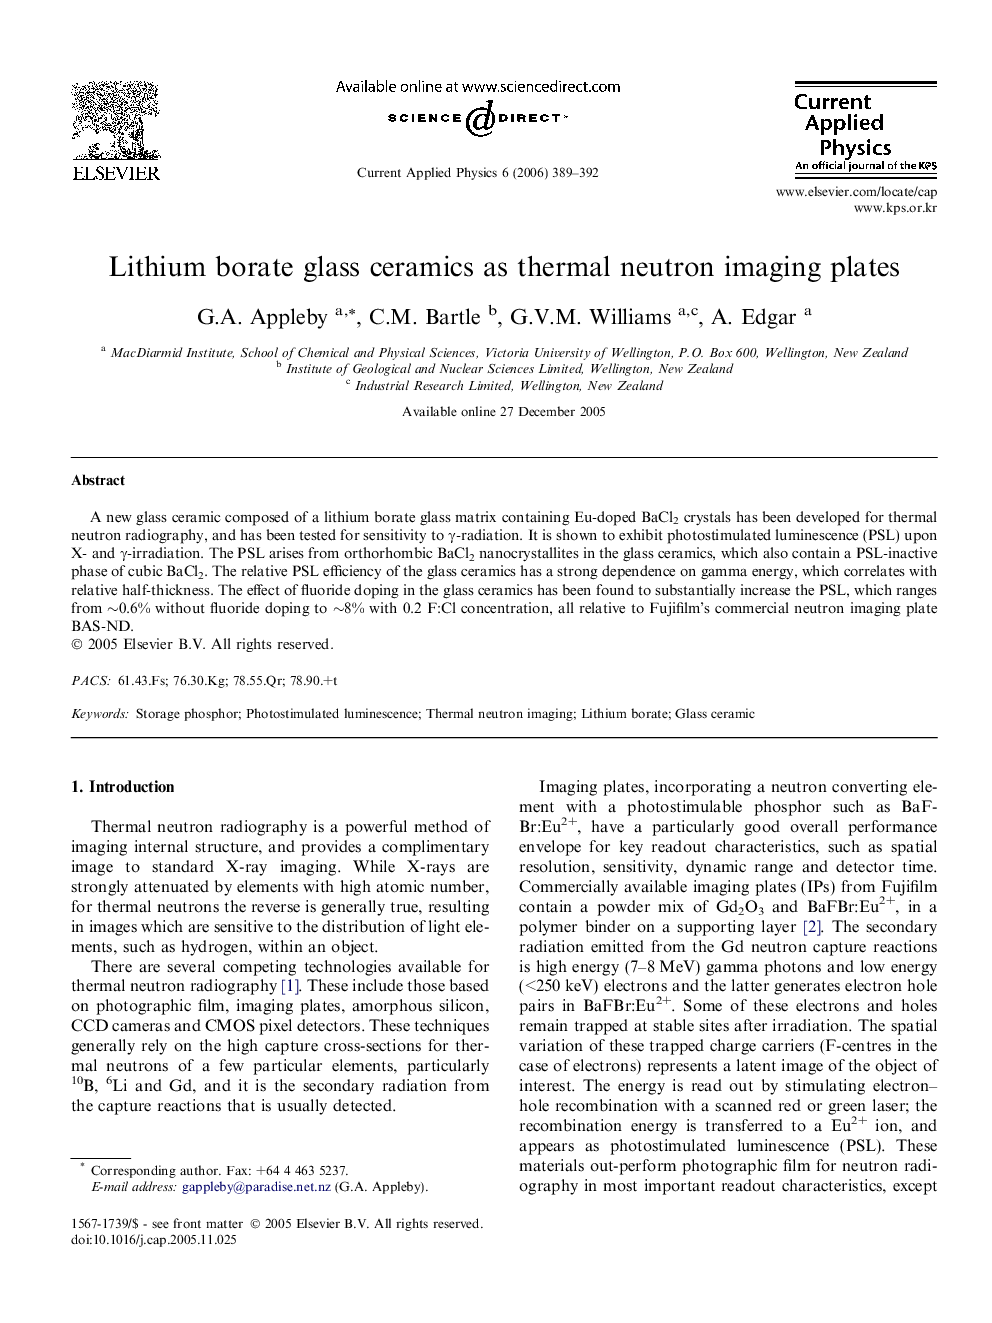 Lithium borate glass ceramics as thermal neutron imaging plates